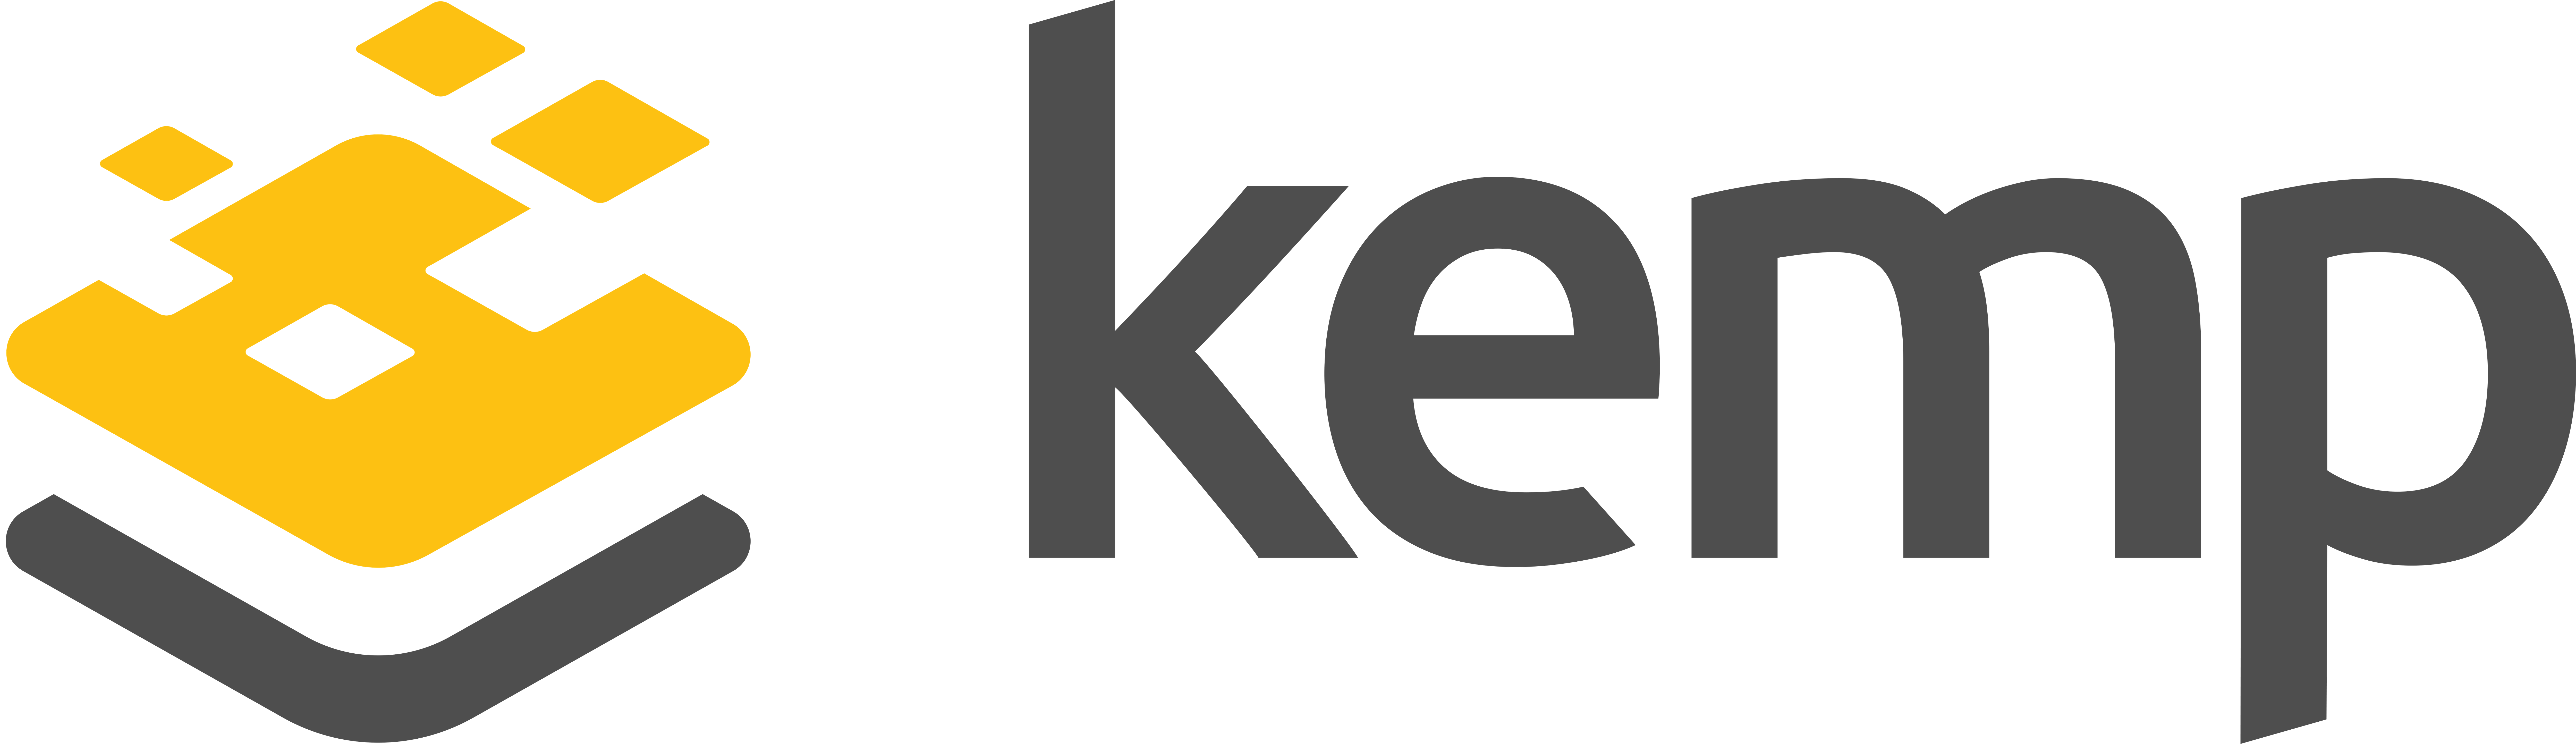 100cm_Kemp_Logo_Final_Horizontal